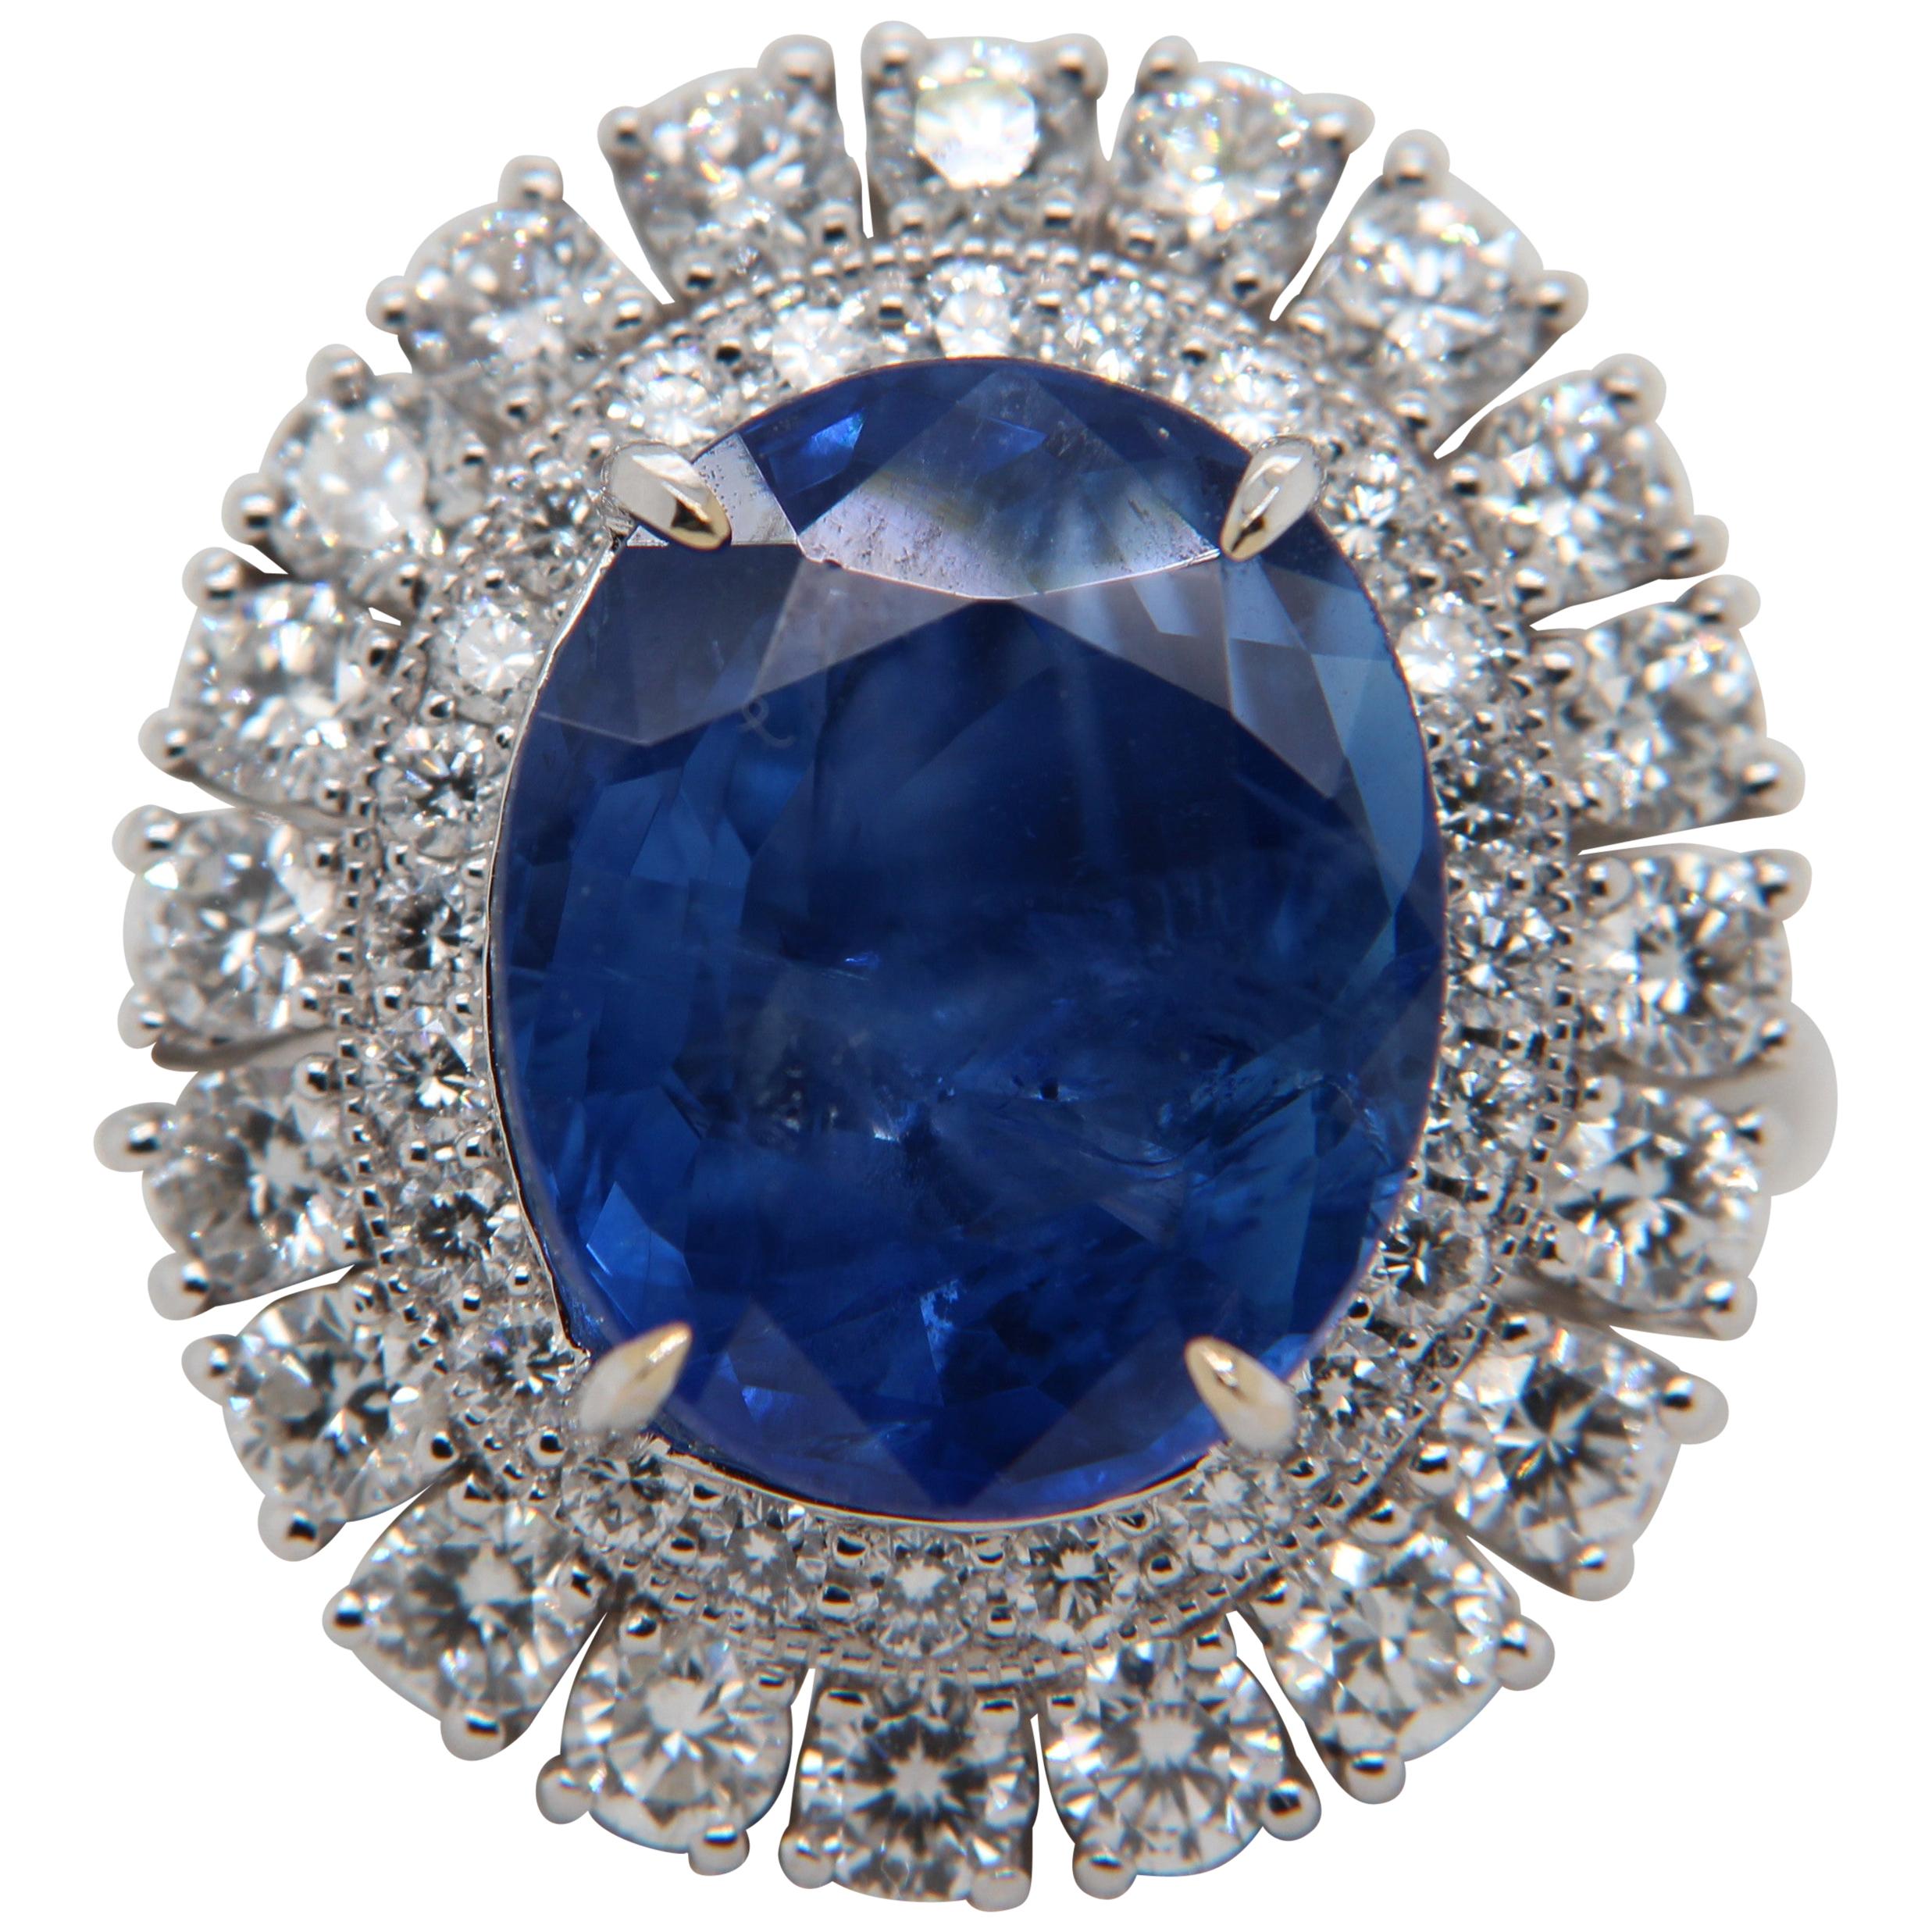 GII Certified 9.66 Carat Burma Blue Sapphire Diamond Ring